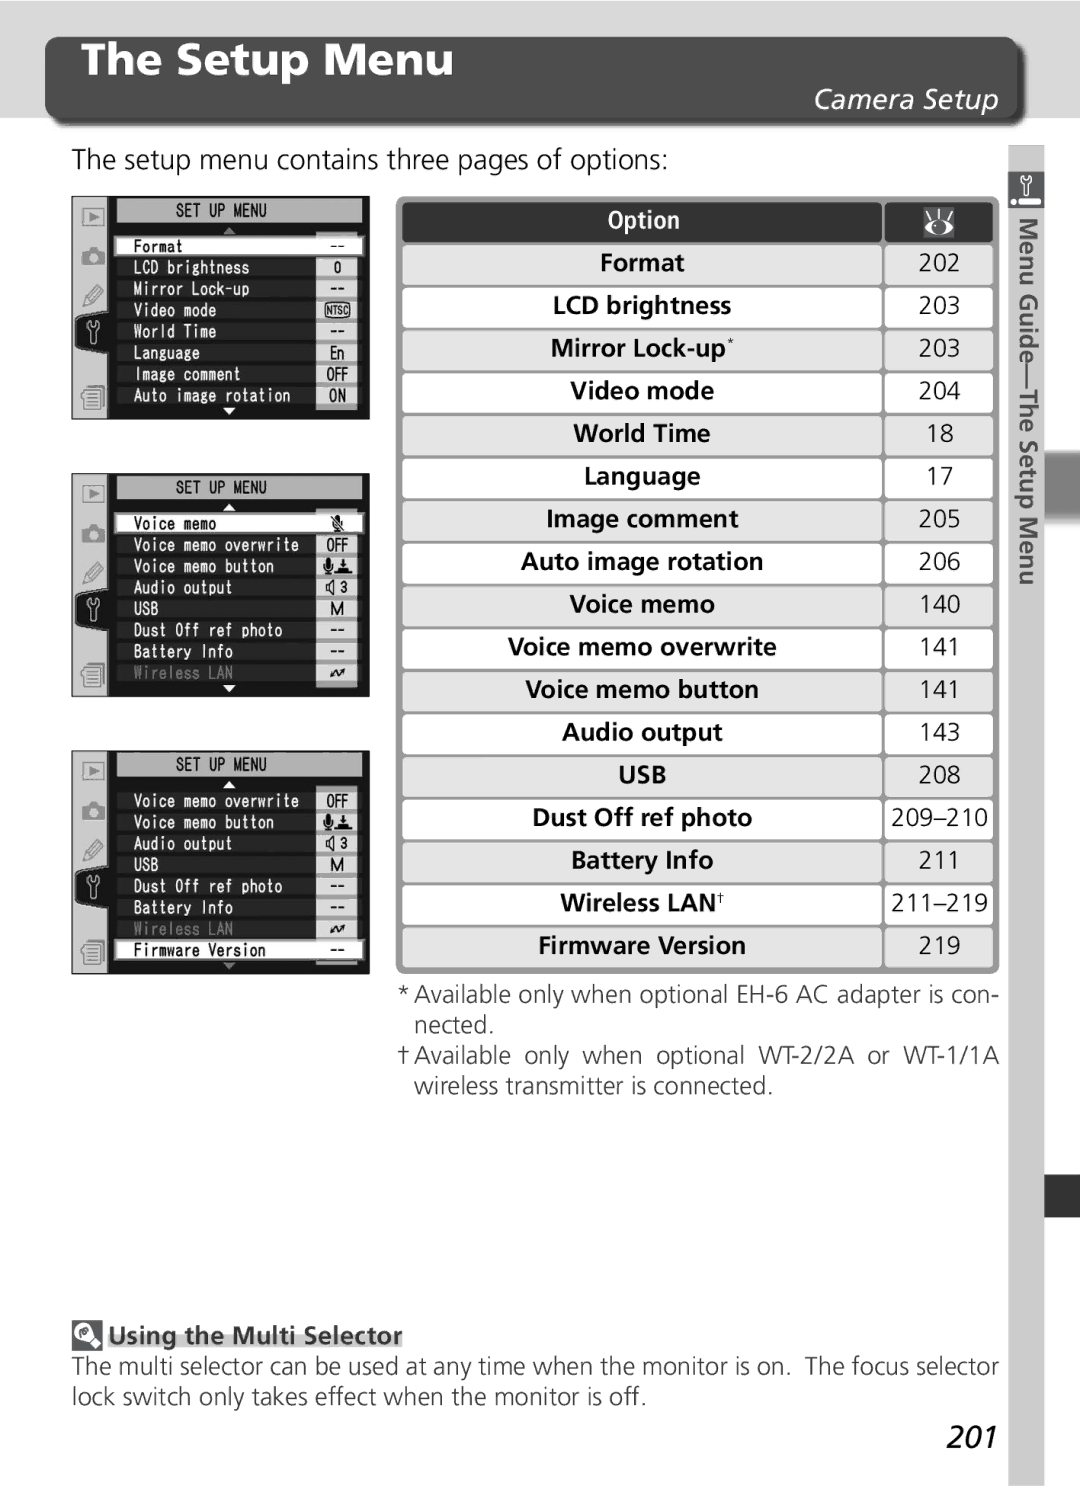 Nikon D2Hs Setup Menu, 201, Camera Setup, Setup menu contains three pages of options, 141 143 208 209-210 211 211-219 